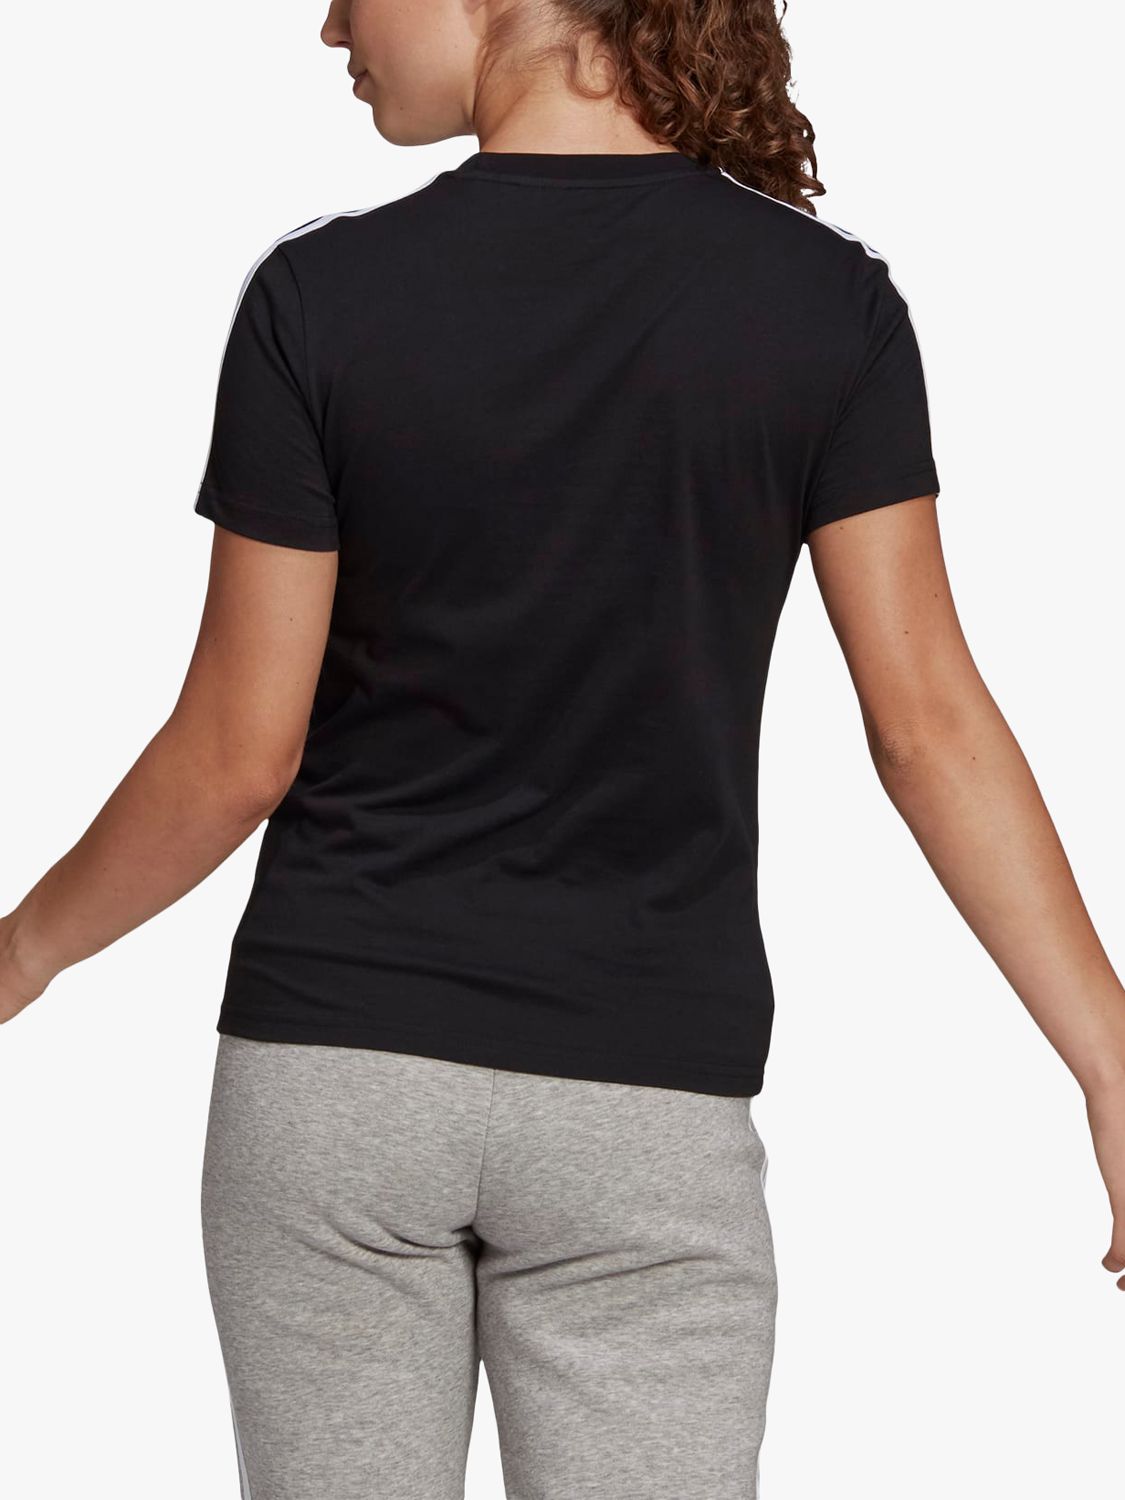 adidas LOUNGEWEAR Essentials Slim 3-Stripes T-Shirt, Black/White, XS